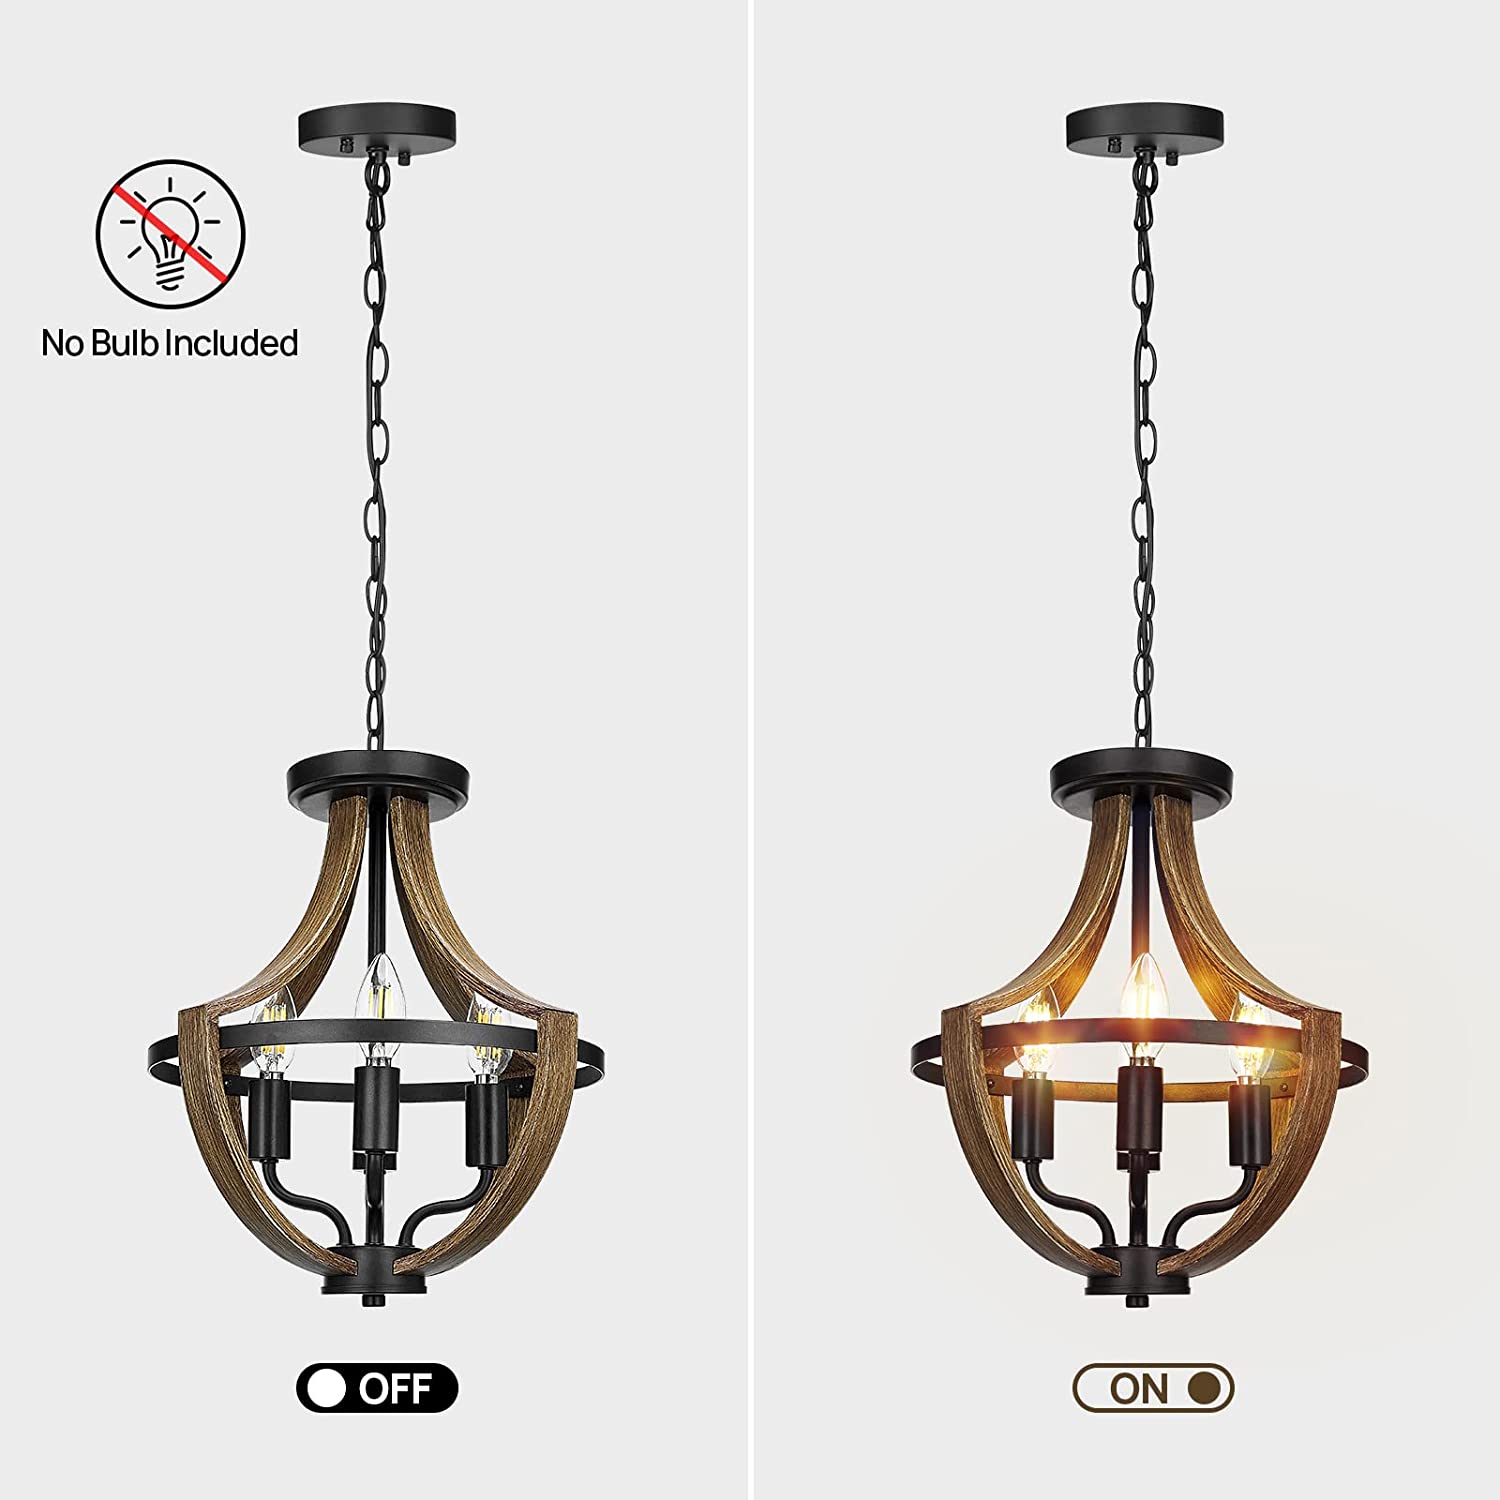 Farmhouse chandelier lighting with retro wood texture 4 light vintage pendant lighting